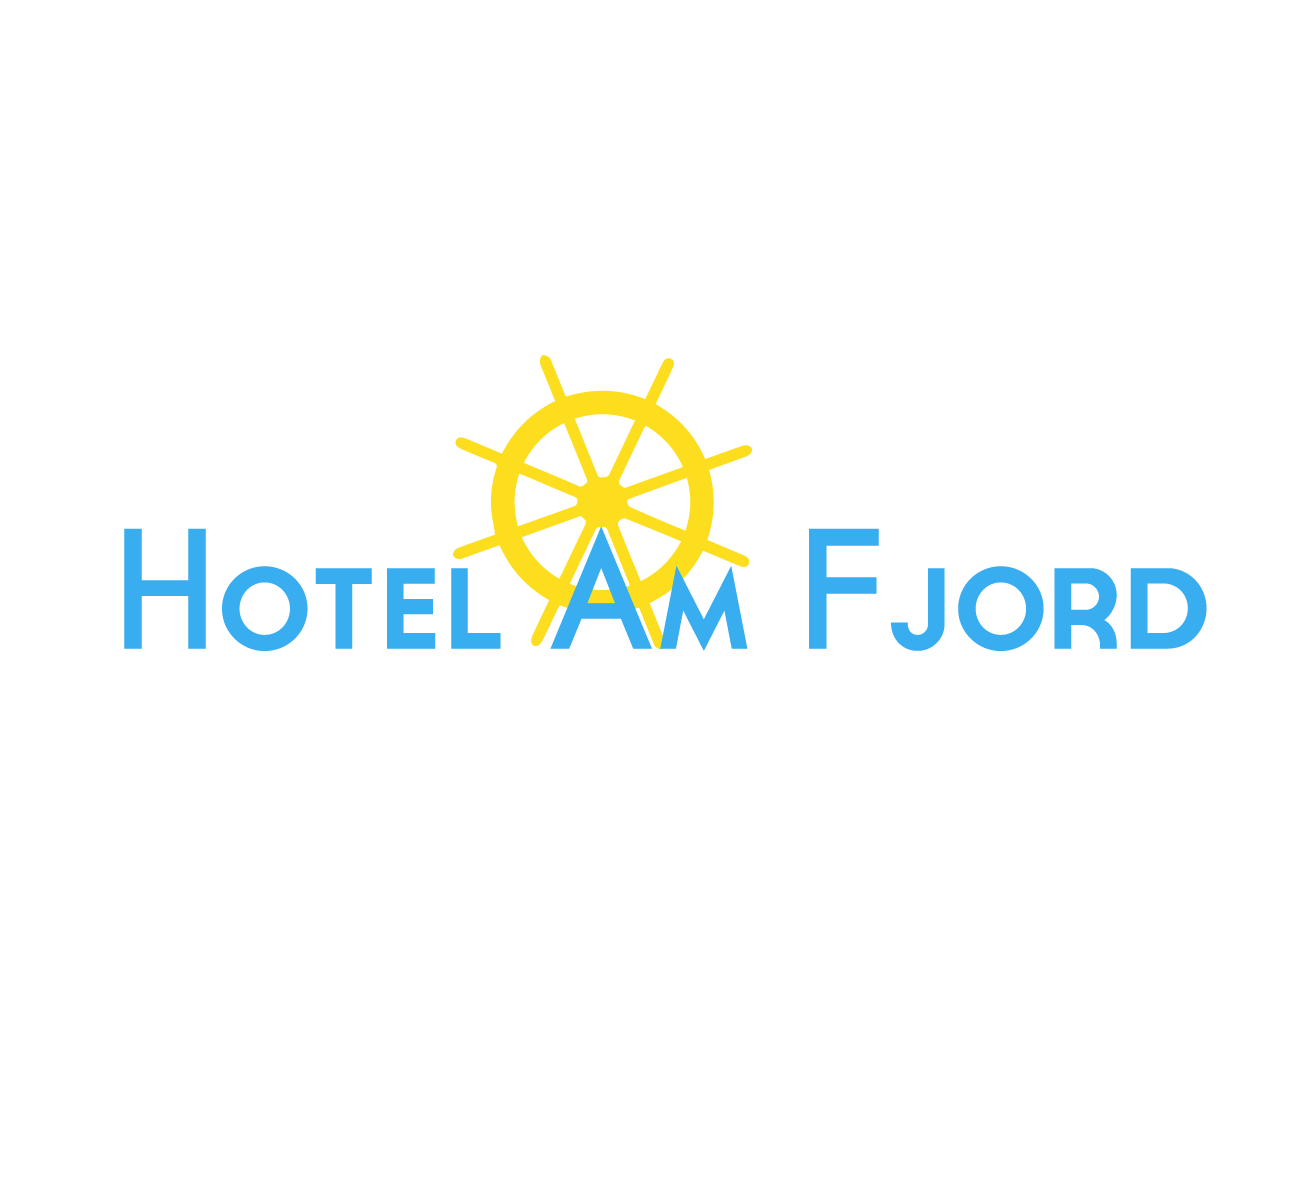 Graham Logo - Hotel Logo Design for Hotel am Fjord by graham. Design